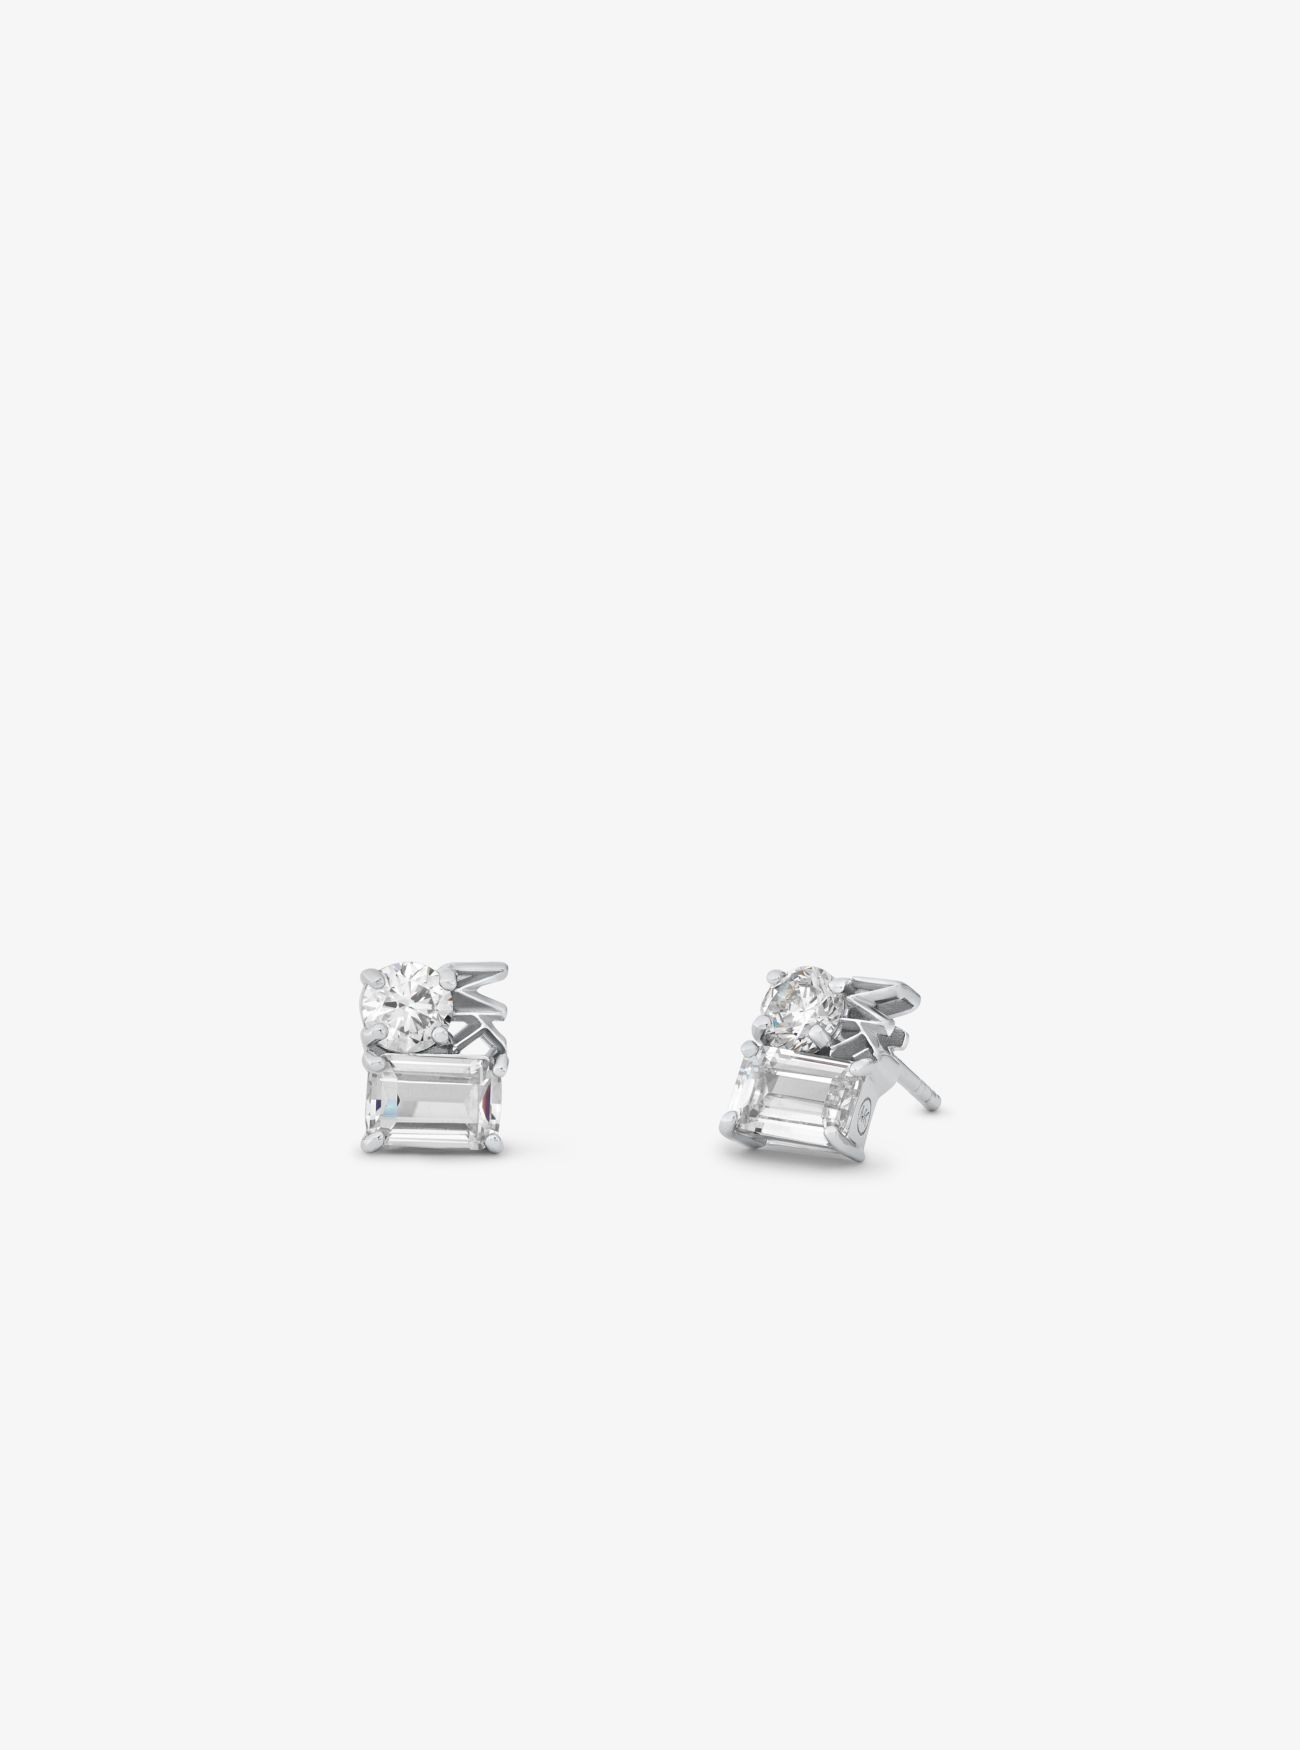 MK Precious Metal-Plated Sterling Silver Logo Stud Earrings - Silver - Michael Kors